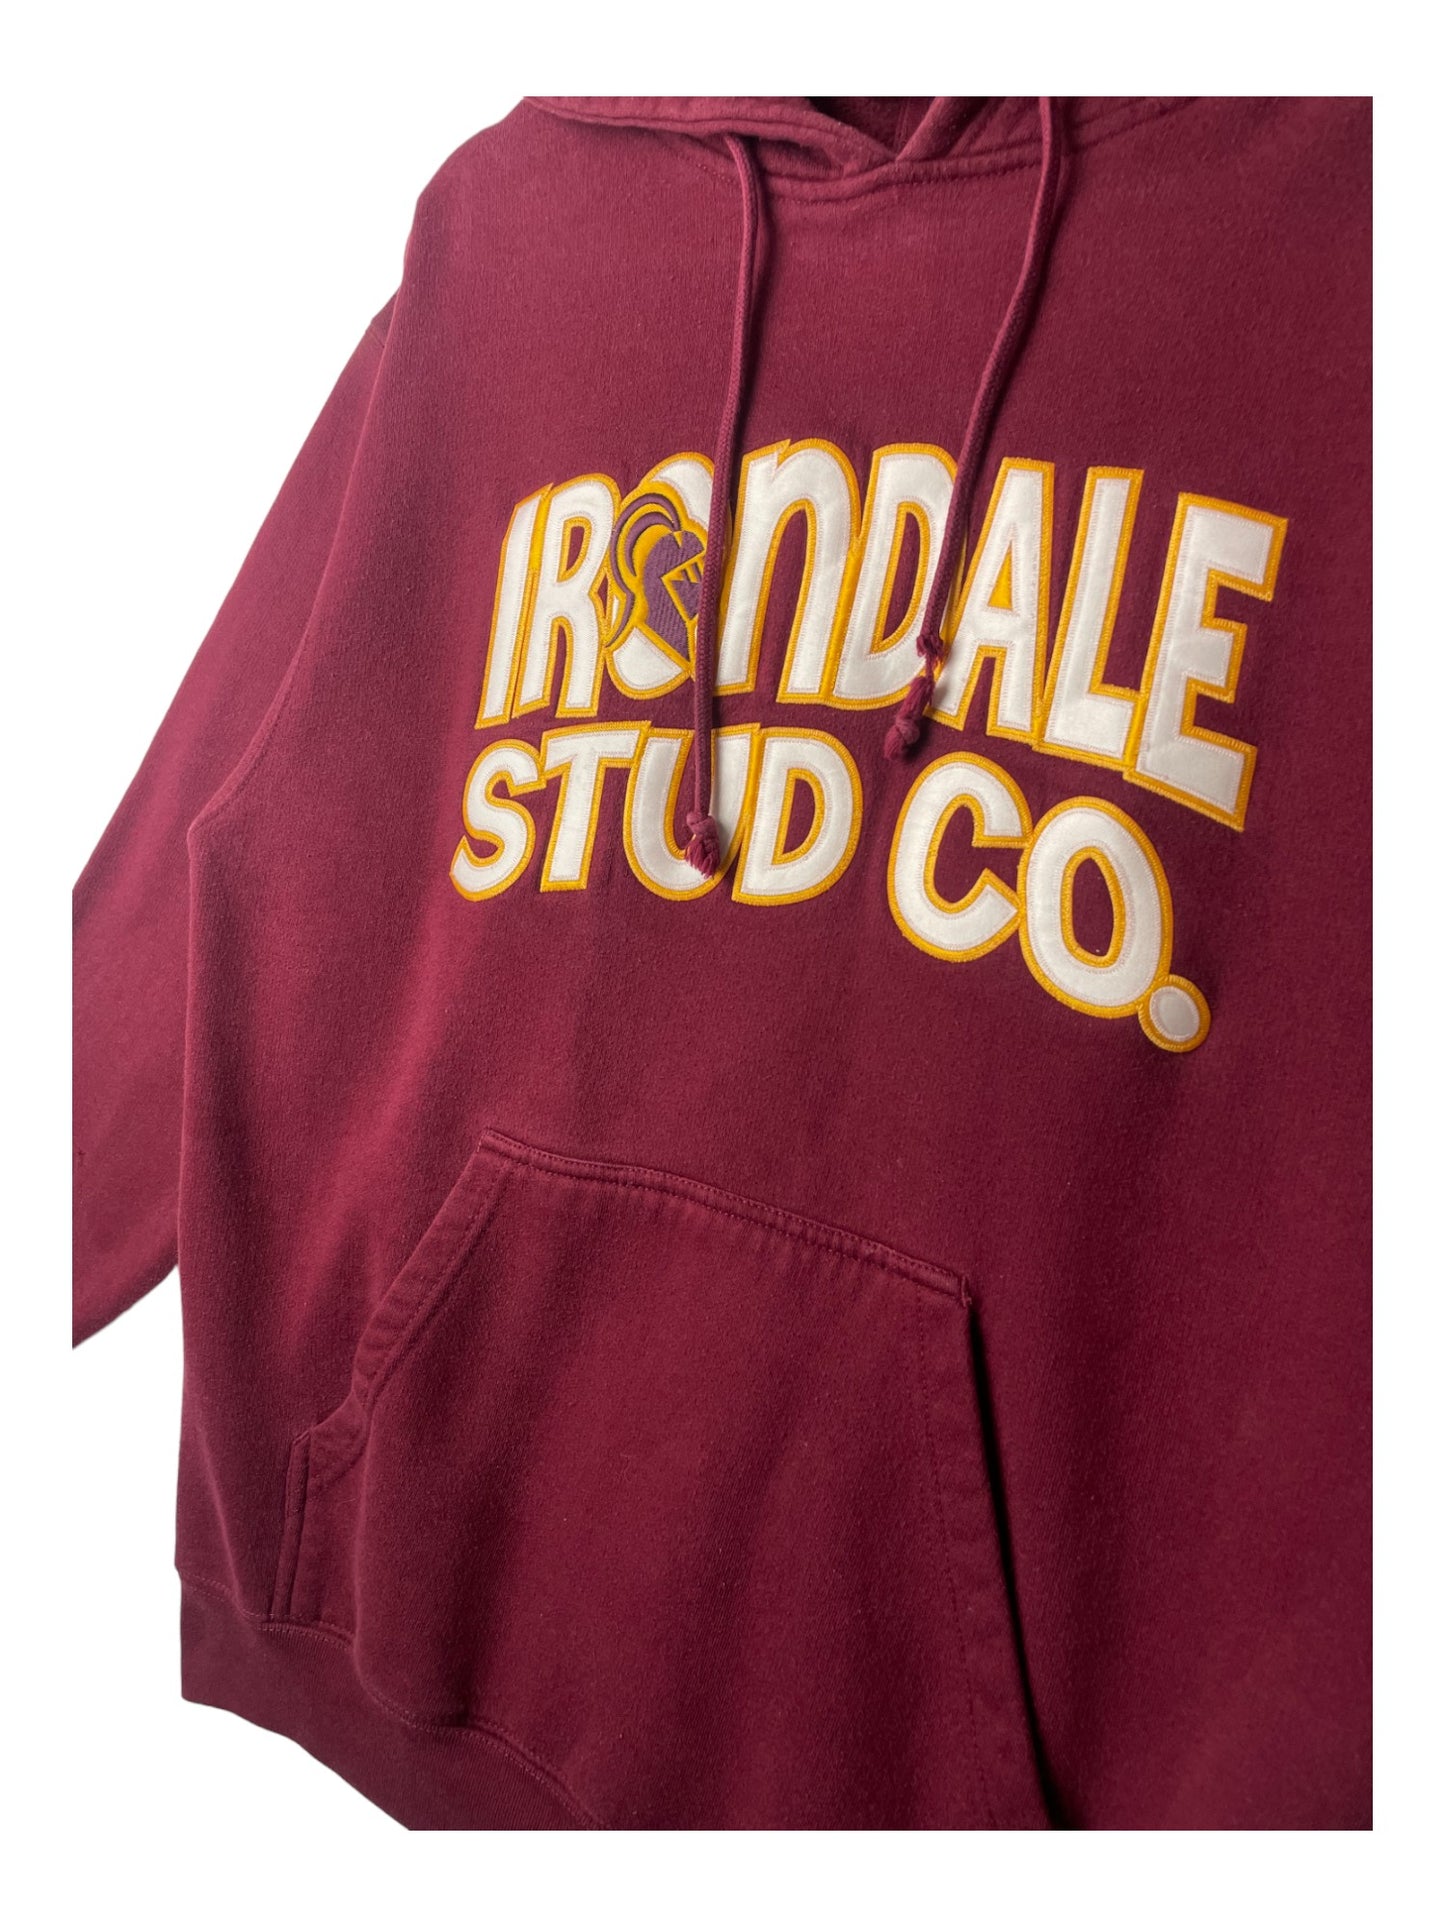 Hoodie Irondale Stud Co